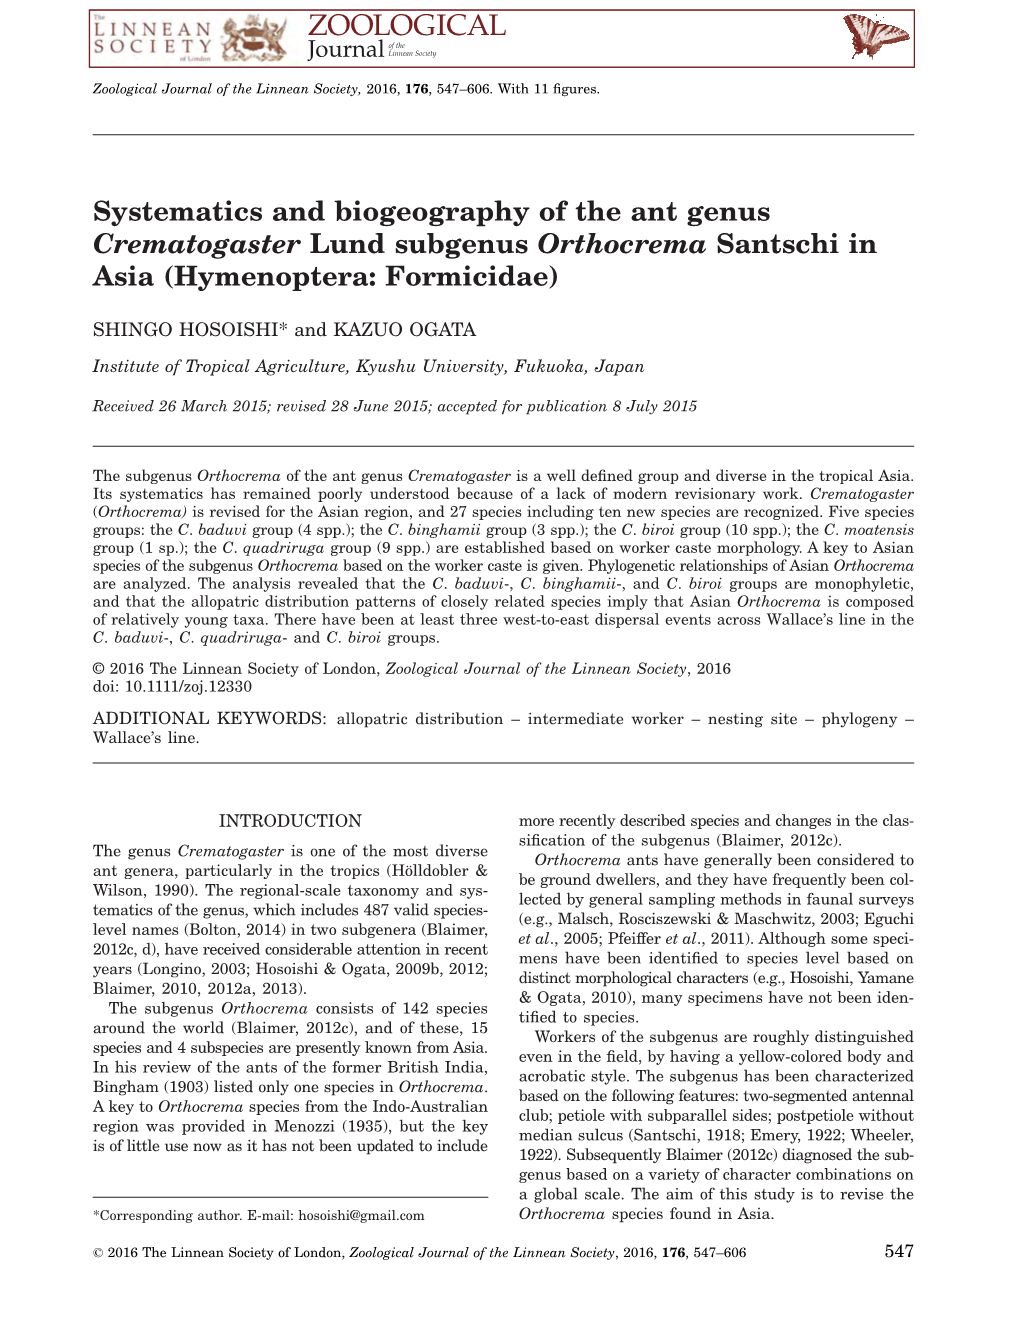 Hosoishi, S. and K. Ogata. 2016. Systematics and Biogeography Of